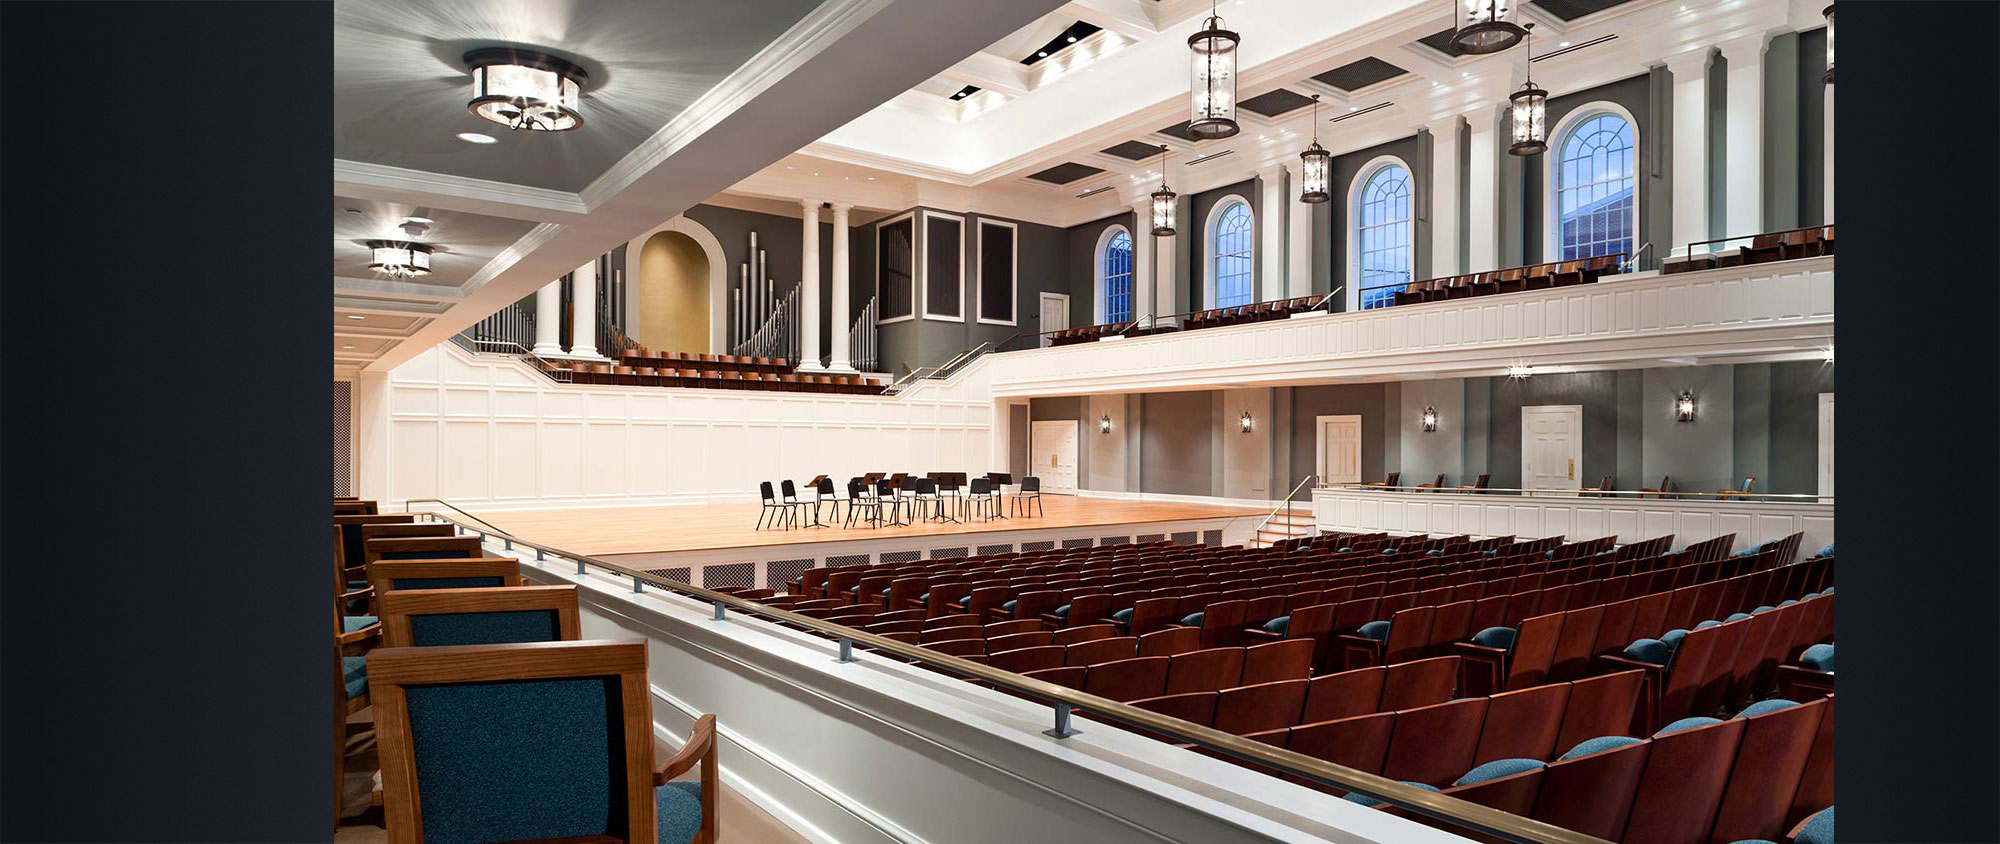 Belmont University, McAfee Concert Hall